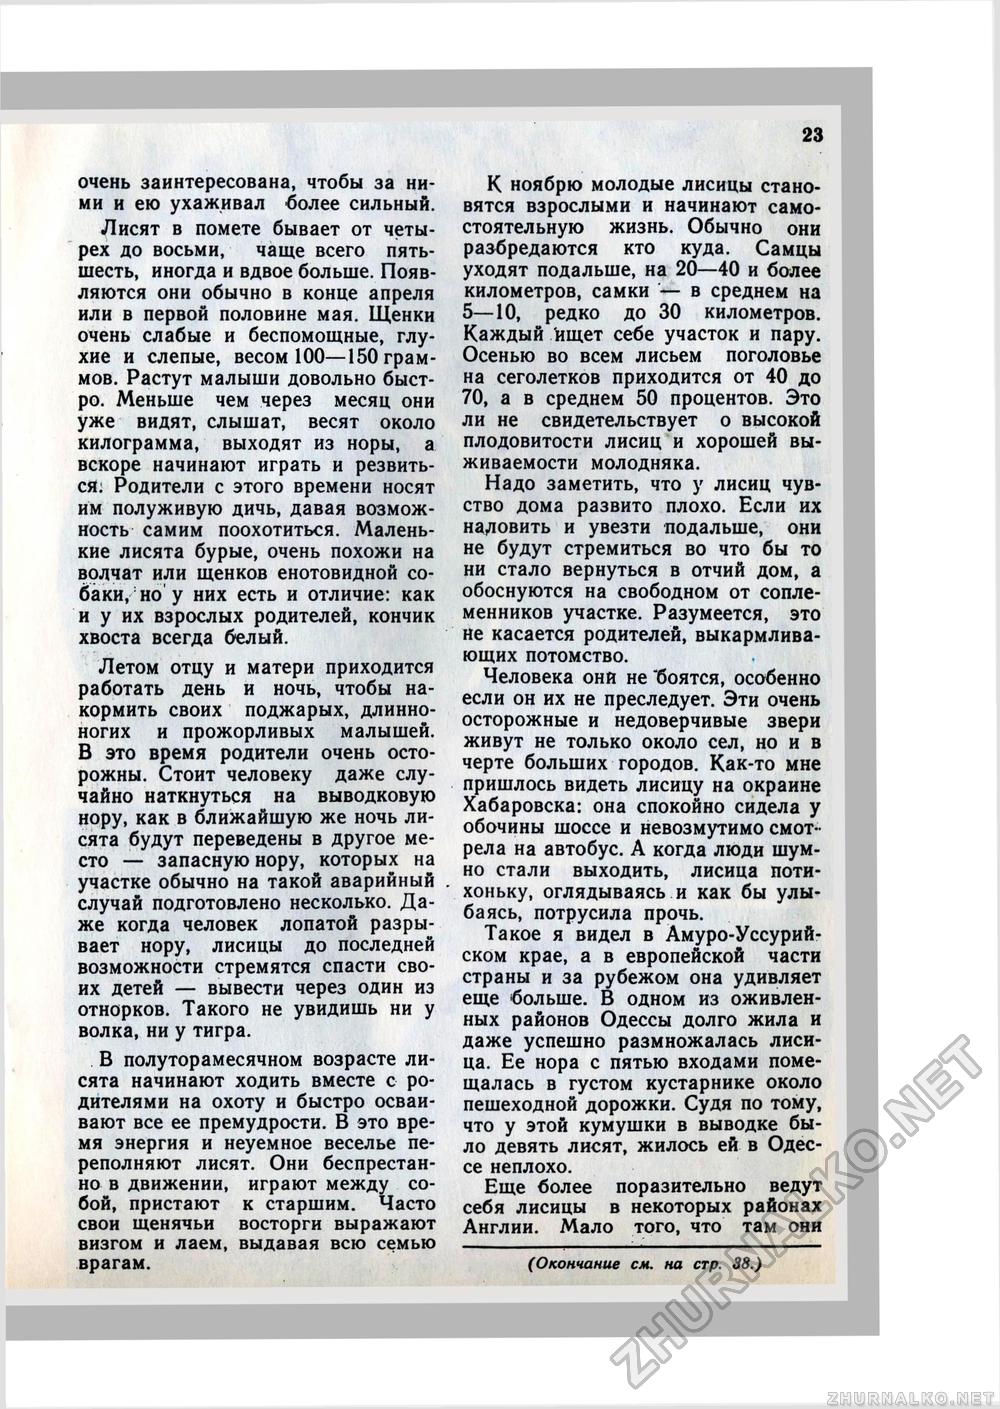 Юный Натуралист 1979-11, страница 25